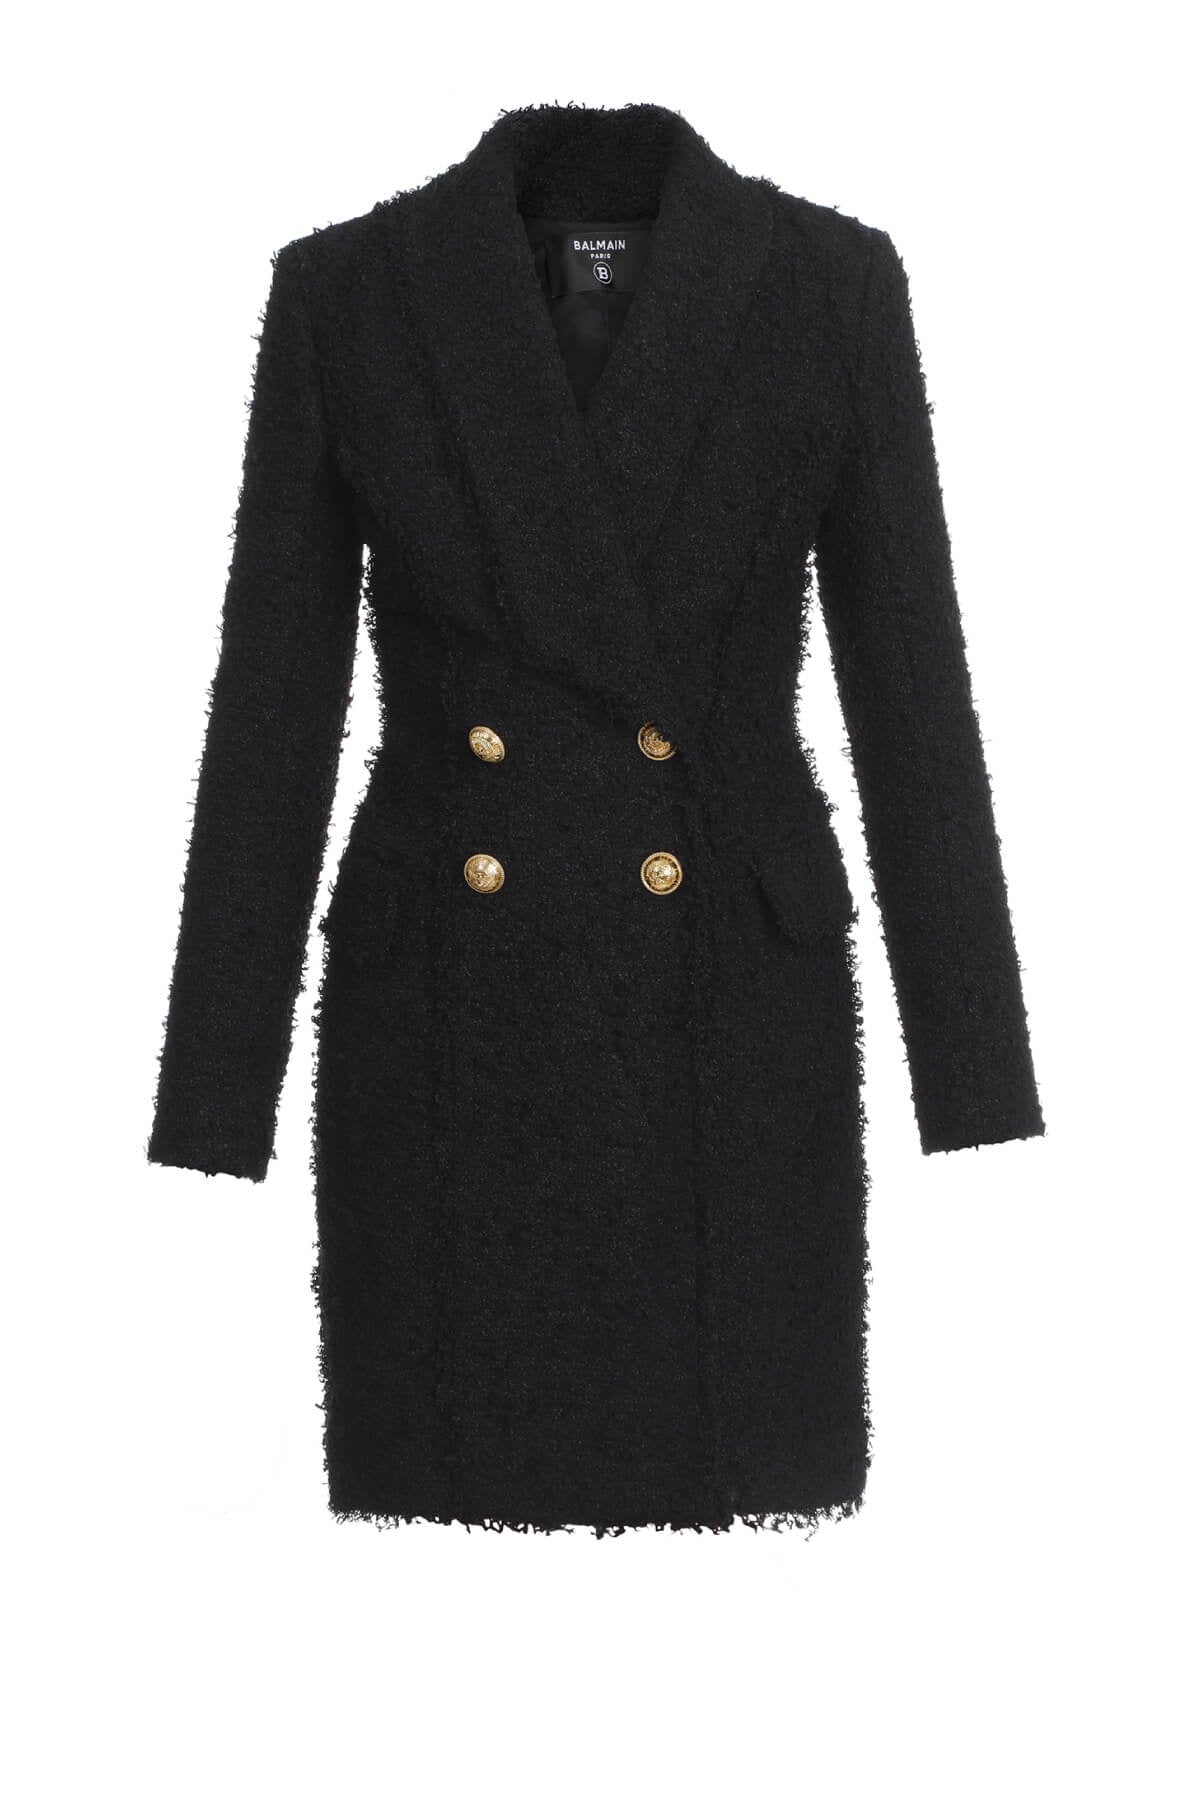 Balmain Double Breasted Tweed Coat - Black